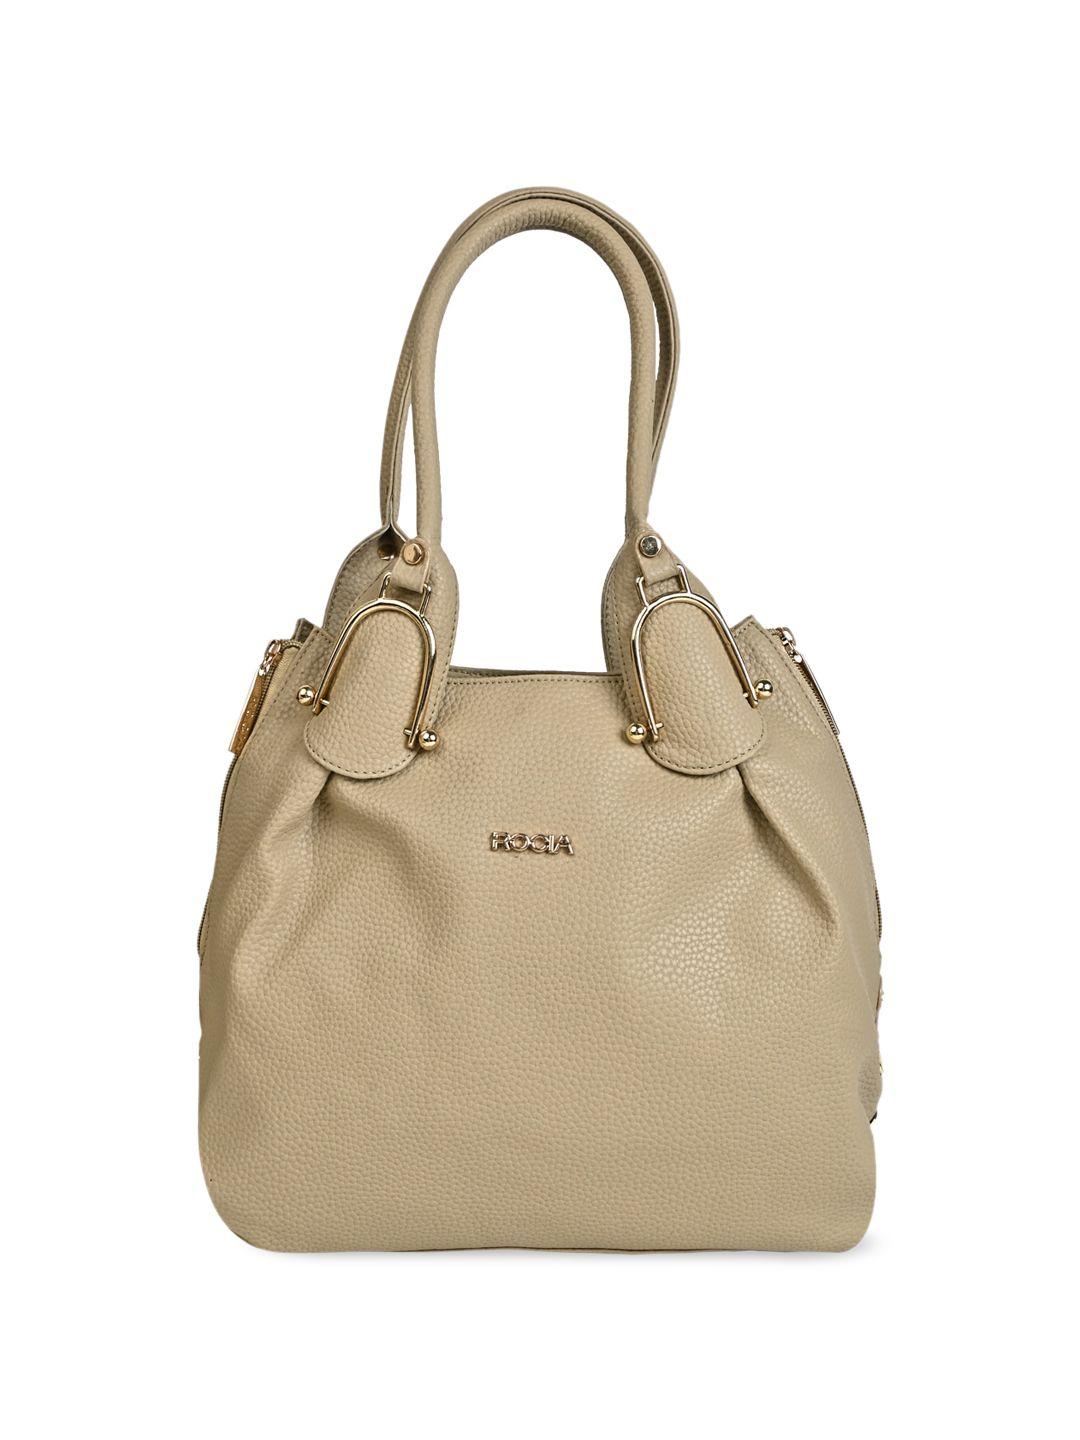 rocia textured structured handheld bag